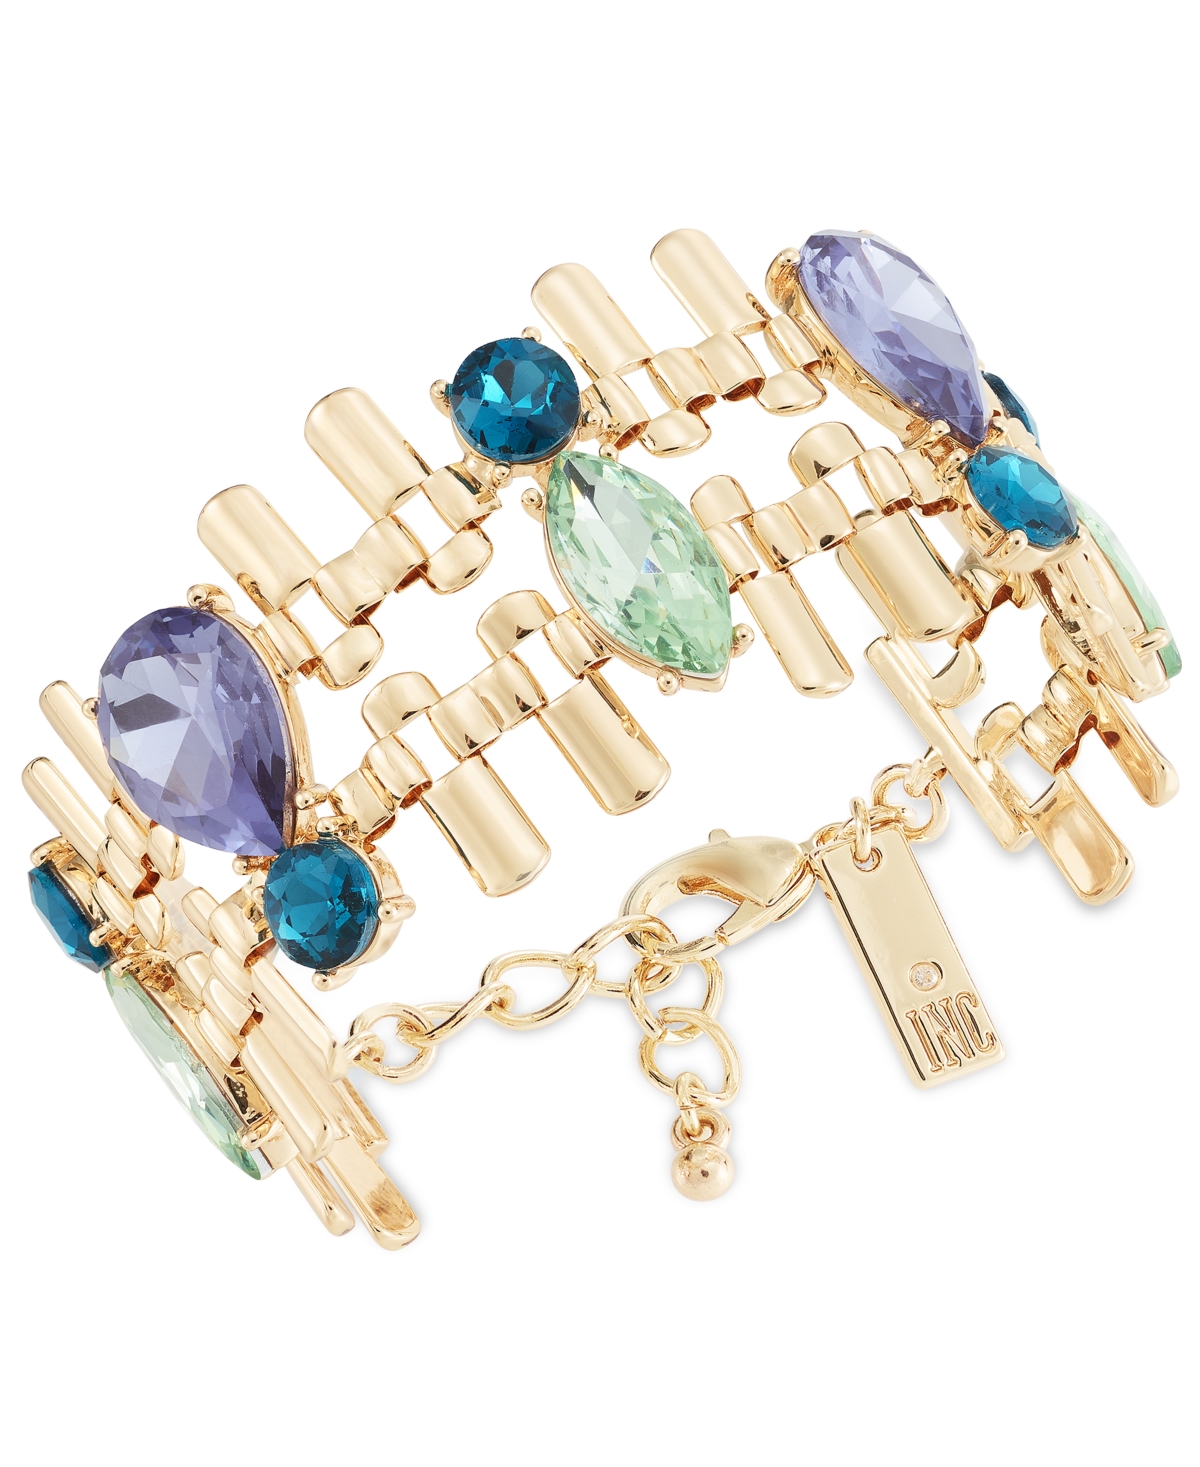 Gold-Tone Multicolor Crystal & Stone Double-Row Flex Bracelet, Created for Macy's - Multi